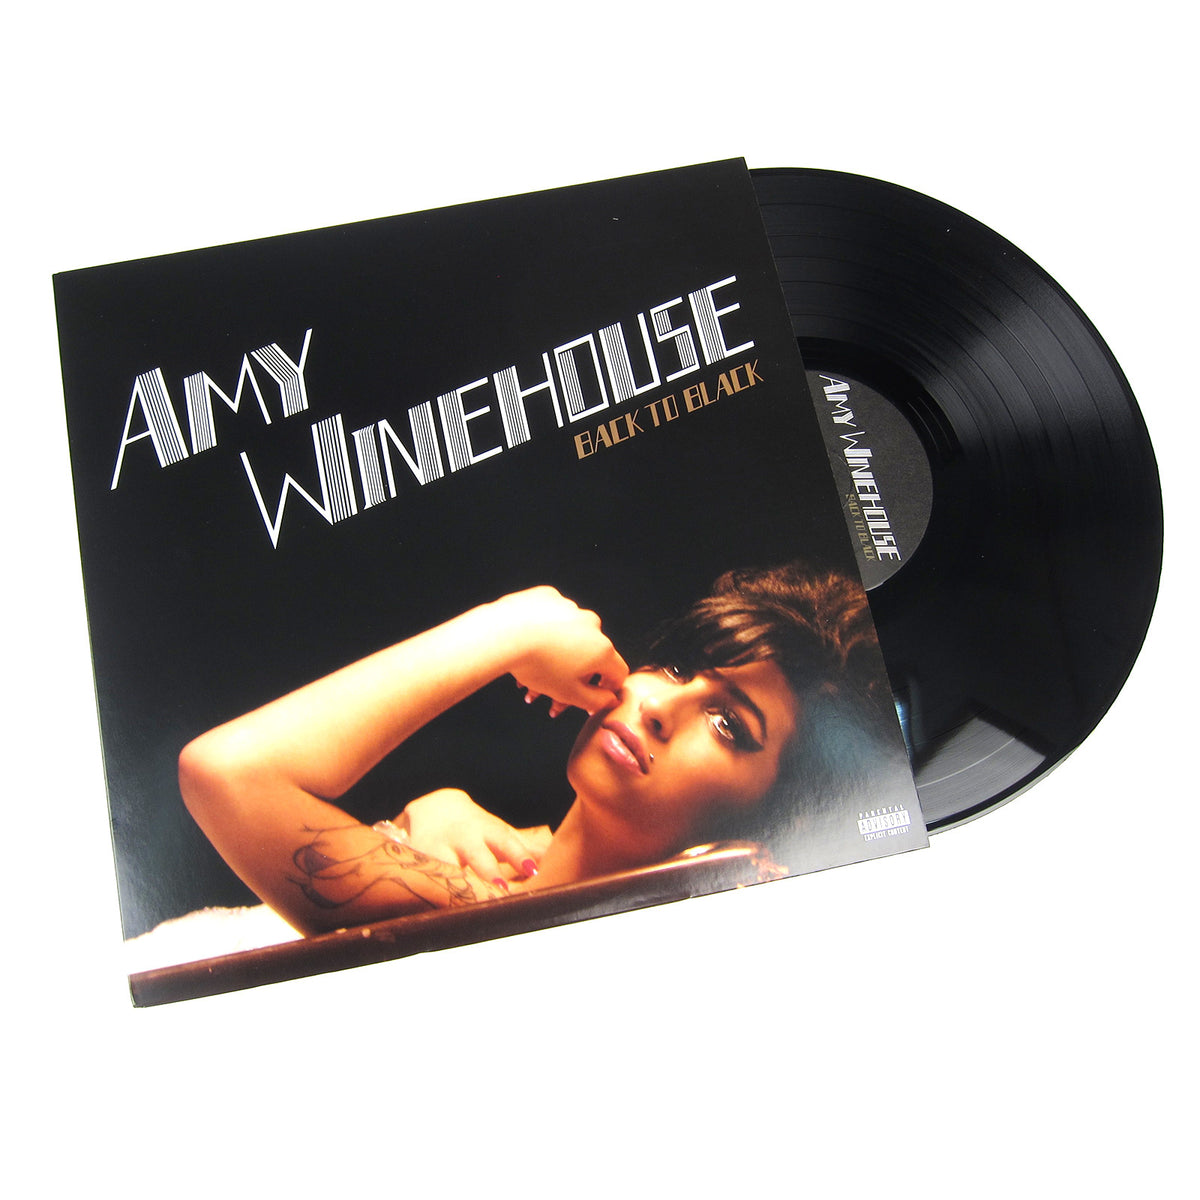 Vinilo Amy Winehouse Back To Black Nuevo Sellado Envío Grts.